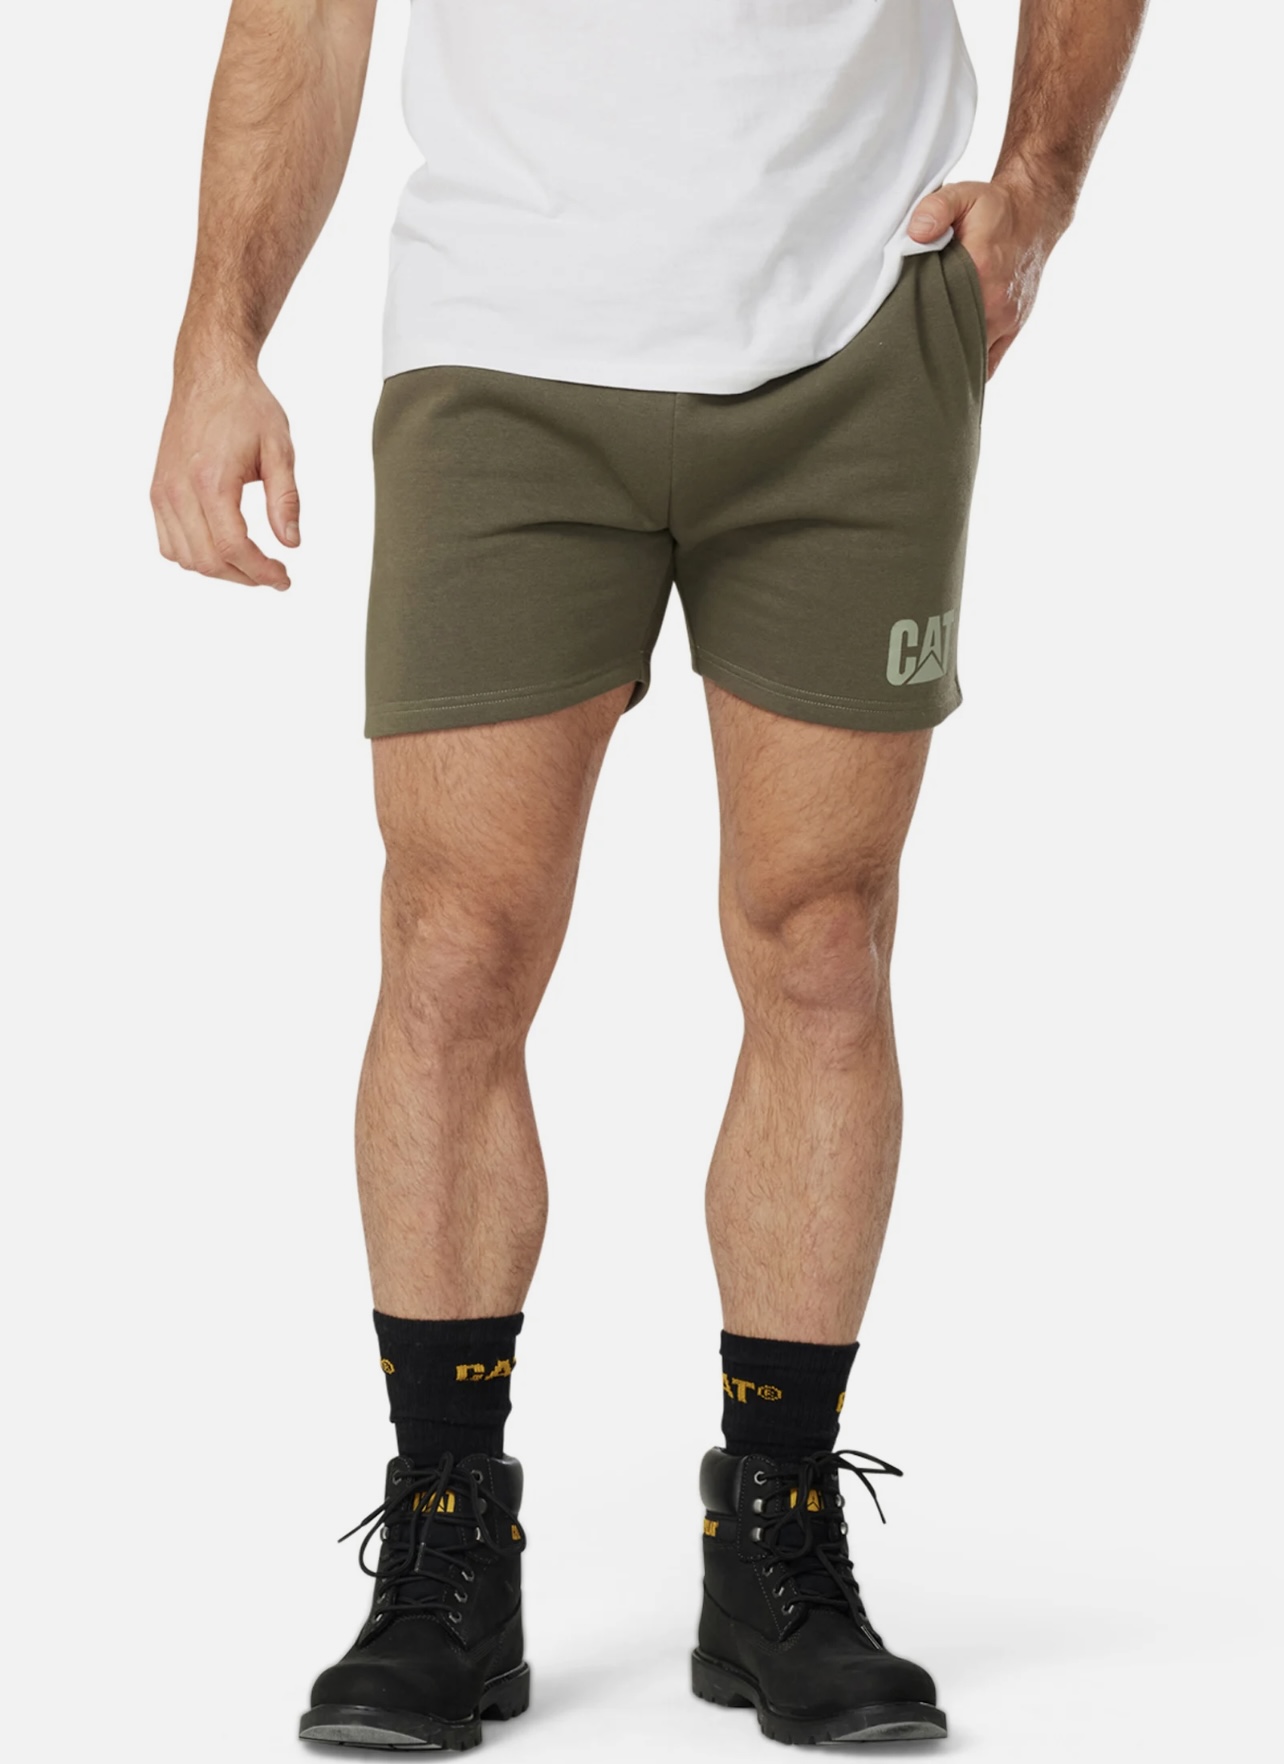 Cat Workwear - DM Fleece Shorts - Military Olive